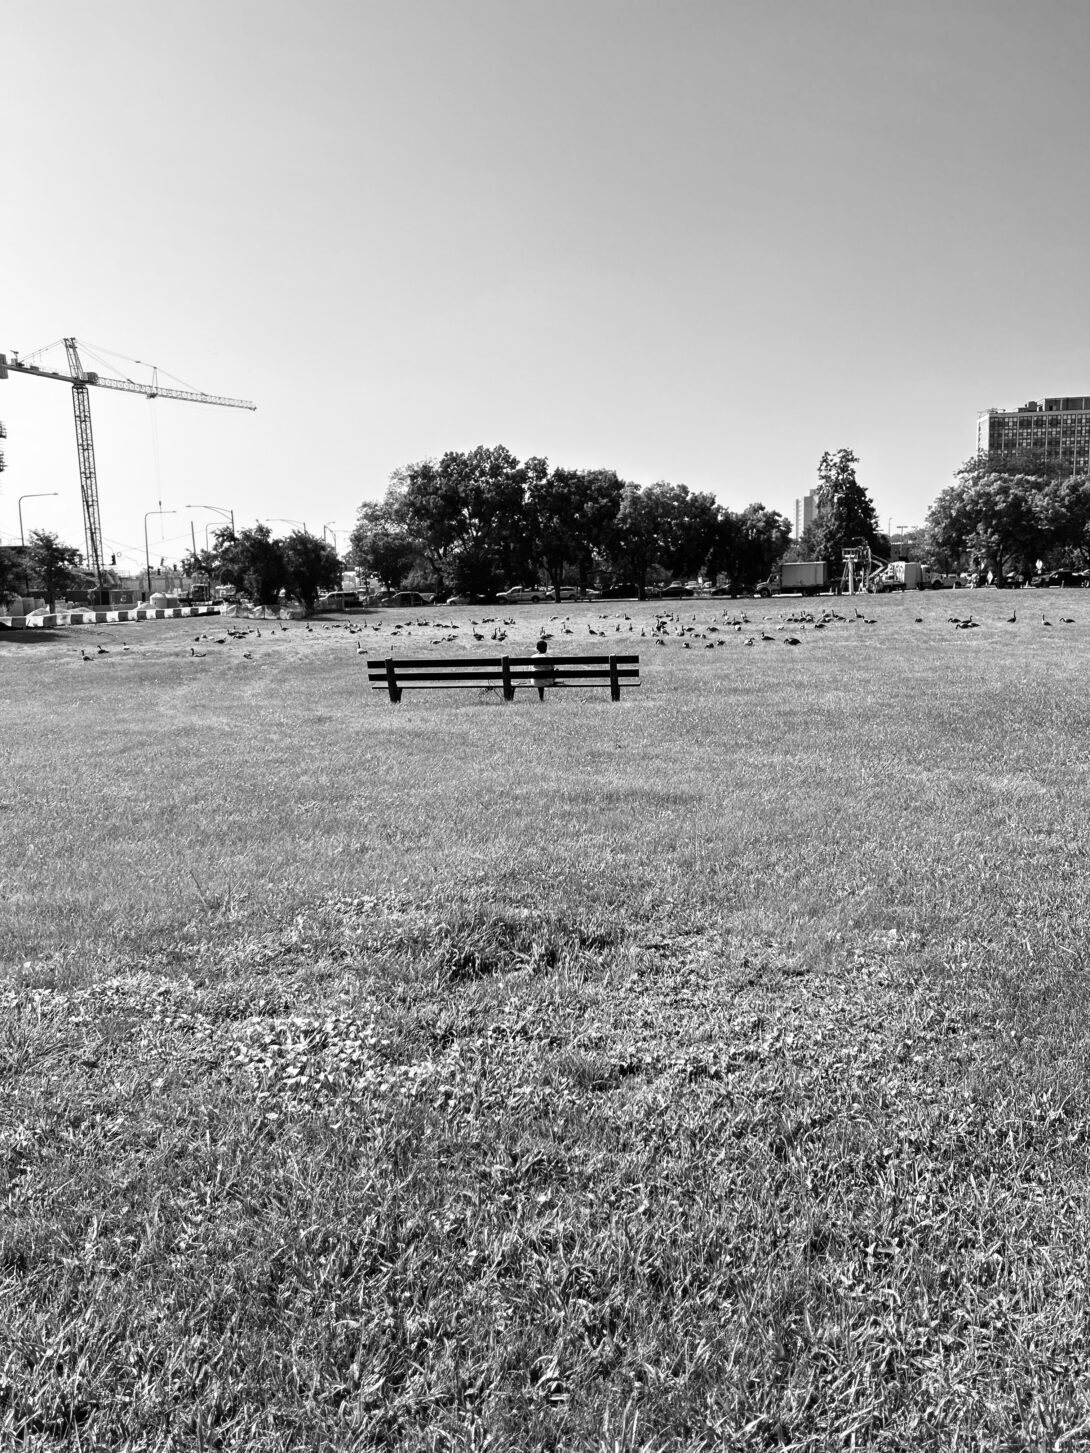 An empty bench in a park sitting inside an open field of grass.